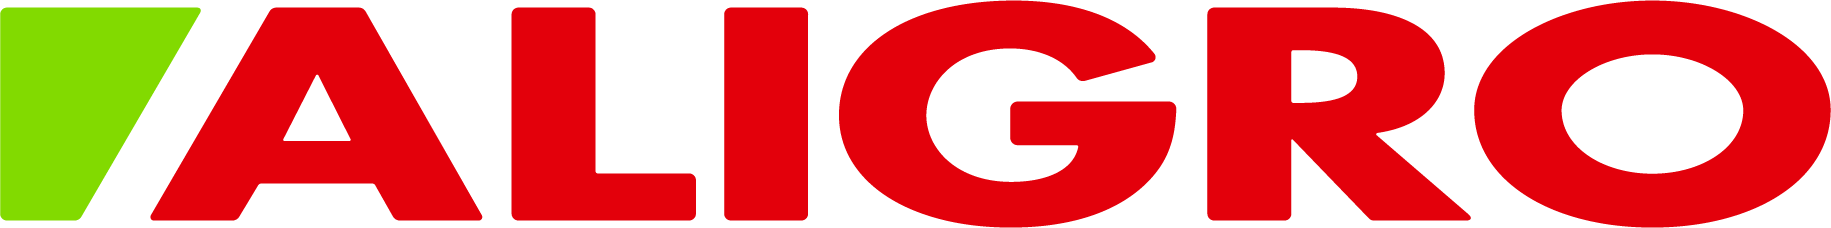 Aligro logo